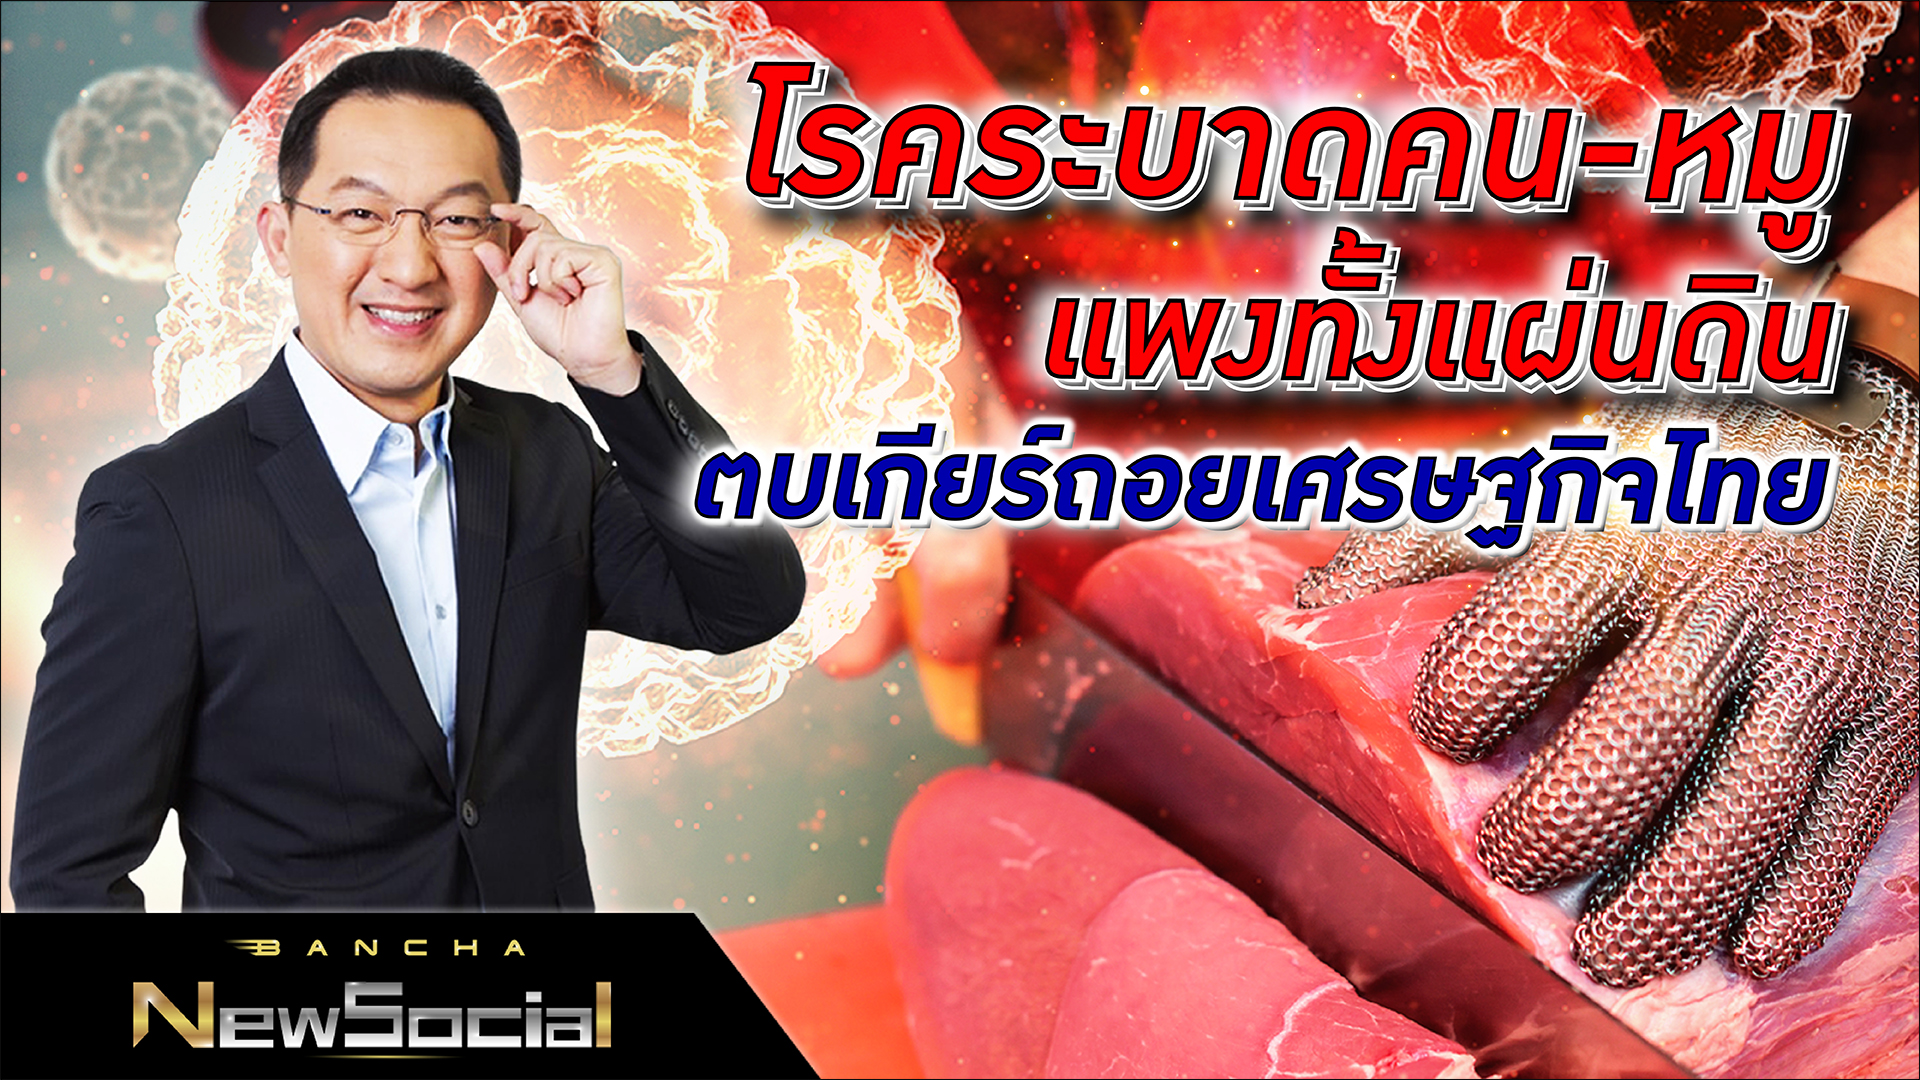 Bancha NewSocial EP.69: โรคระบาดคน หมู แพงทั้งแผ่นดิน ตบเกียร์ถอยเศรษฐกิจไทย